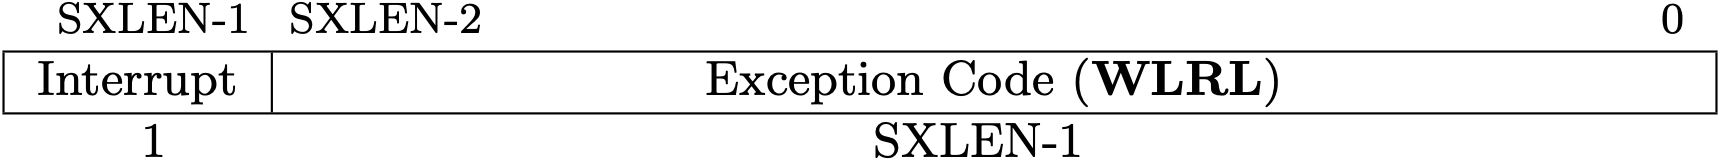 Fig 3.16 scause register (Source: Figure 4.11: Supervisor Cause register scause. in Volume II: Privileged Architecture)